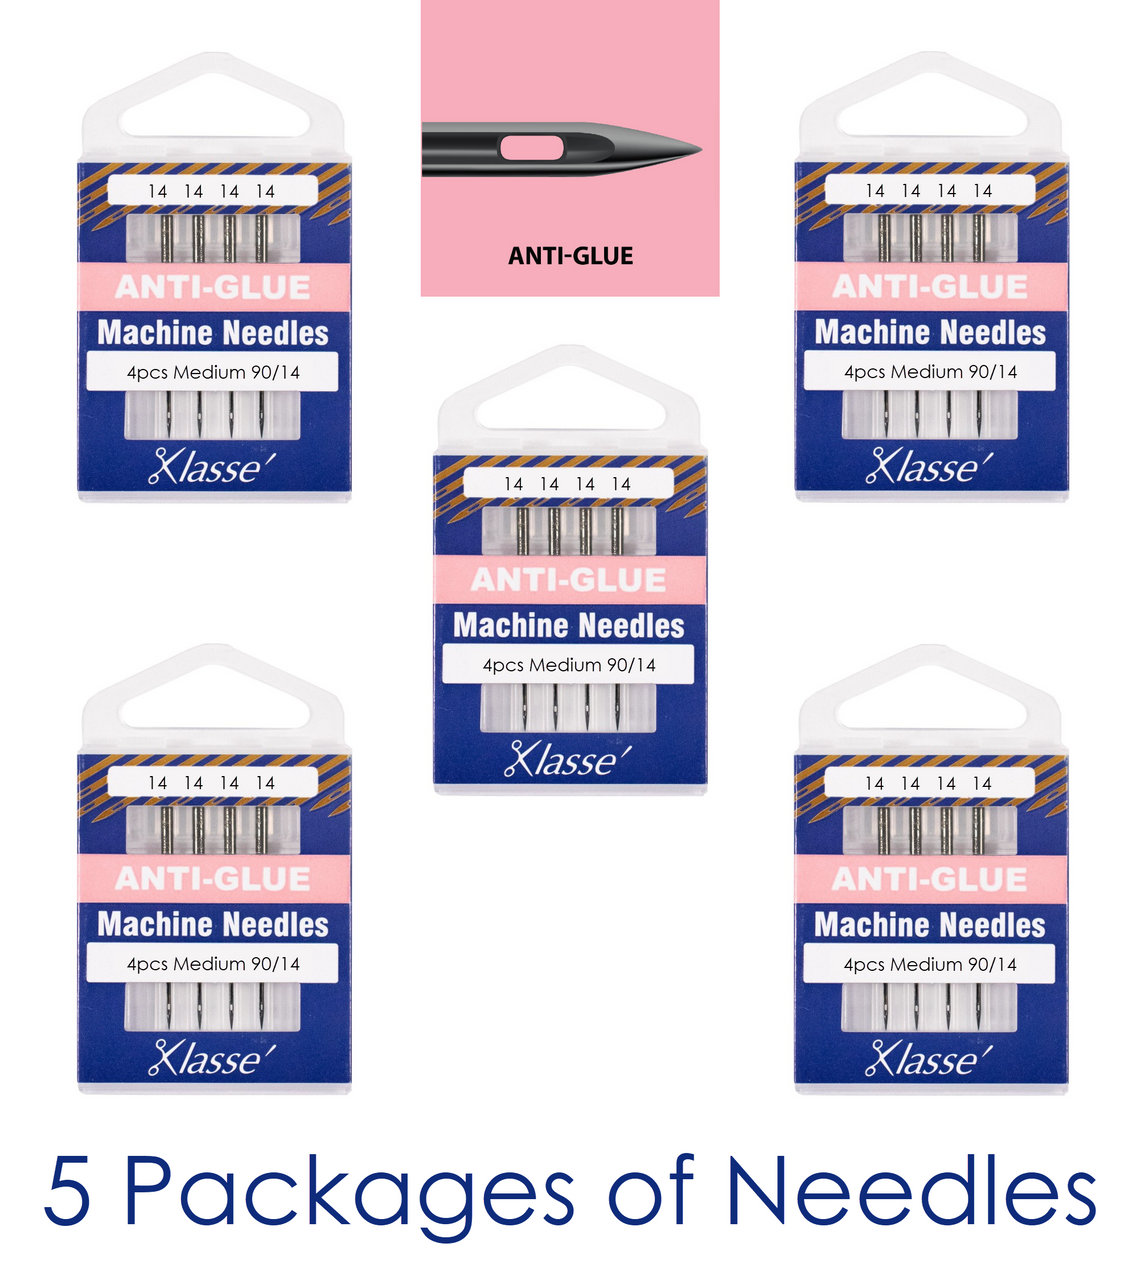 Organ Universal Needles 10 Pack Size 90/14